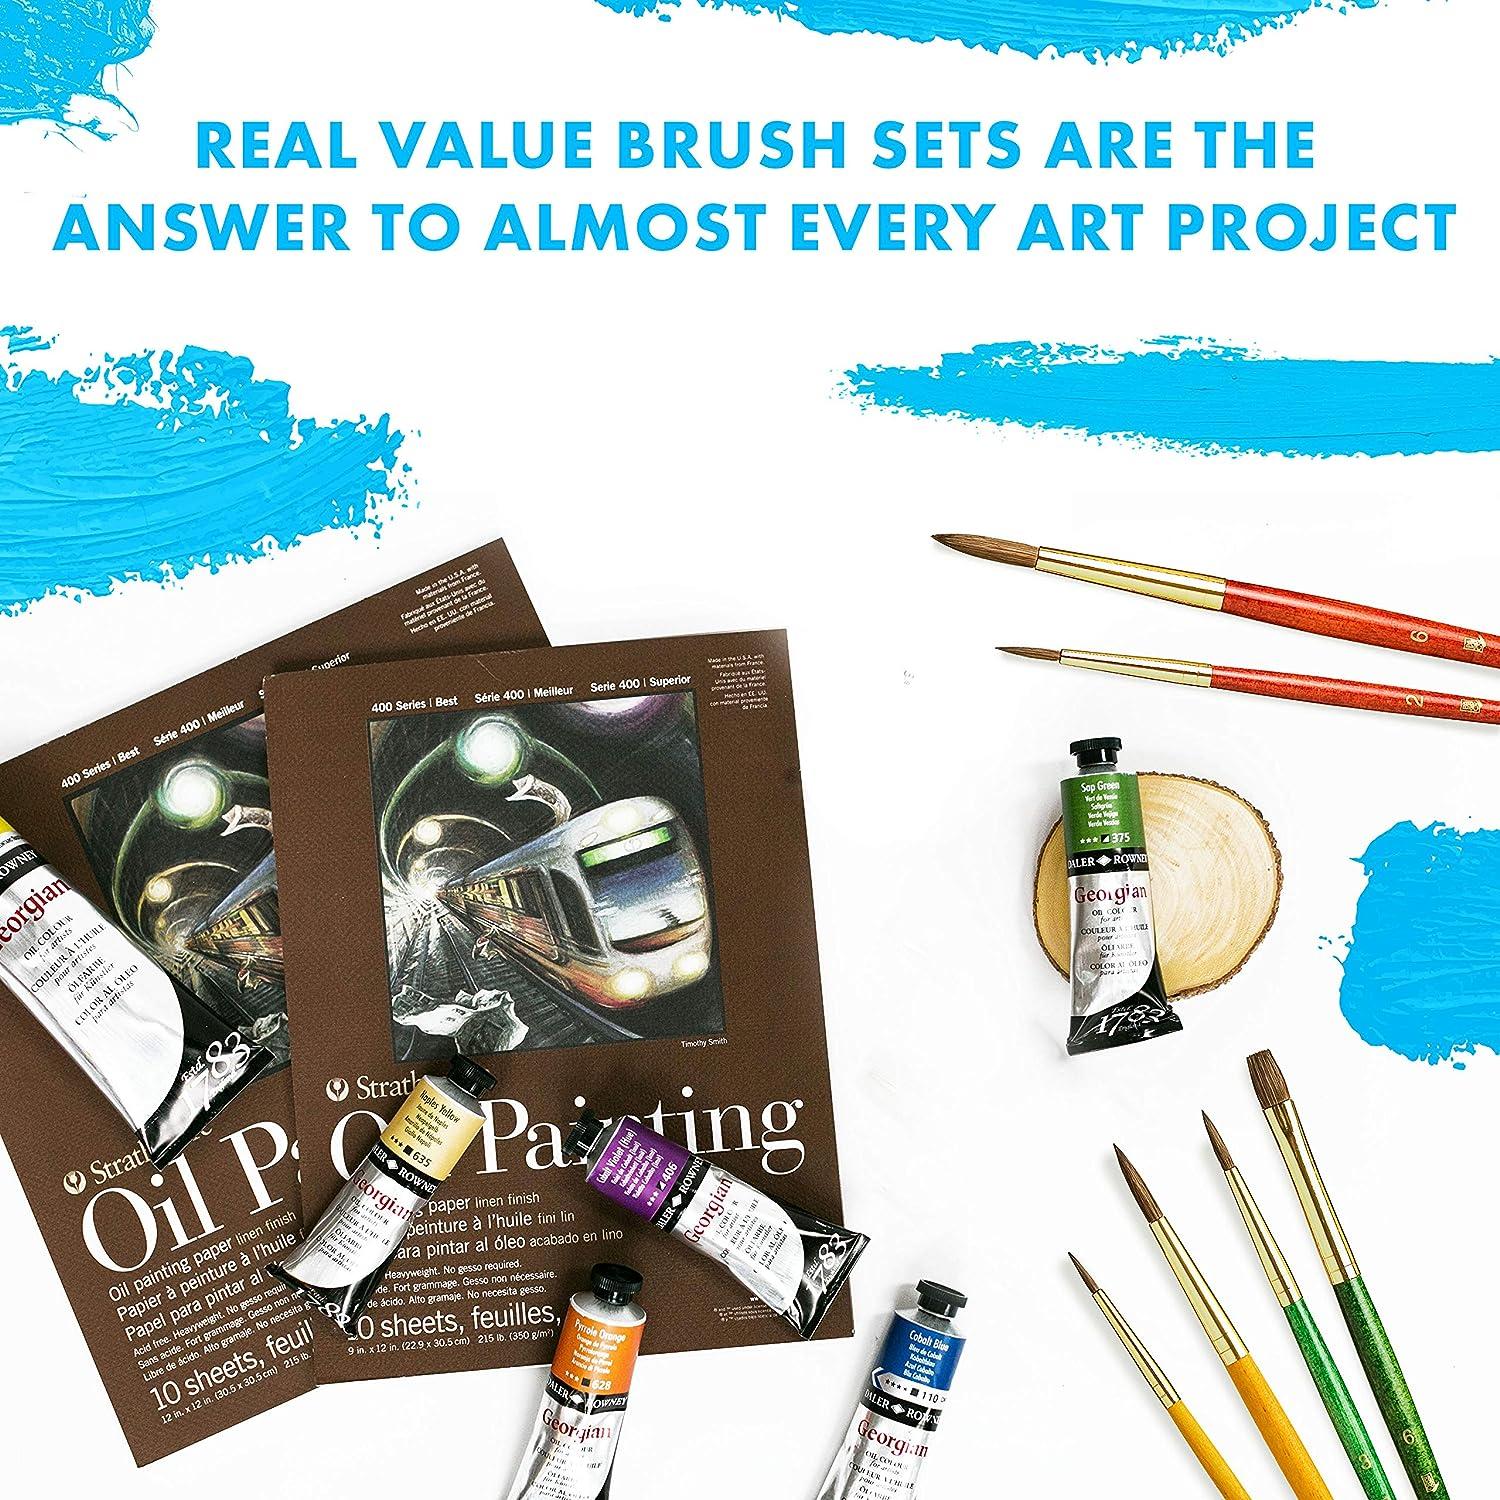 Princeton Art & Brush Co - RealValue Set